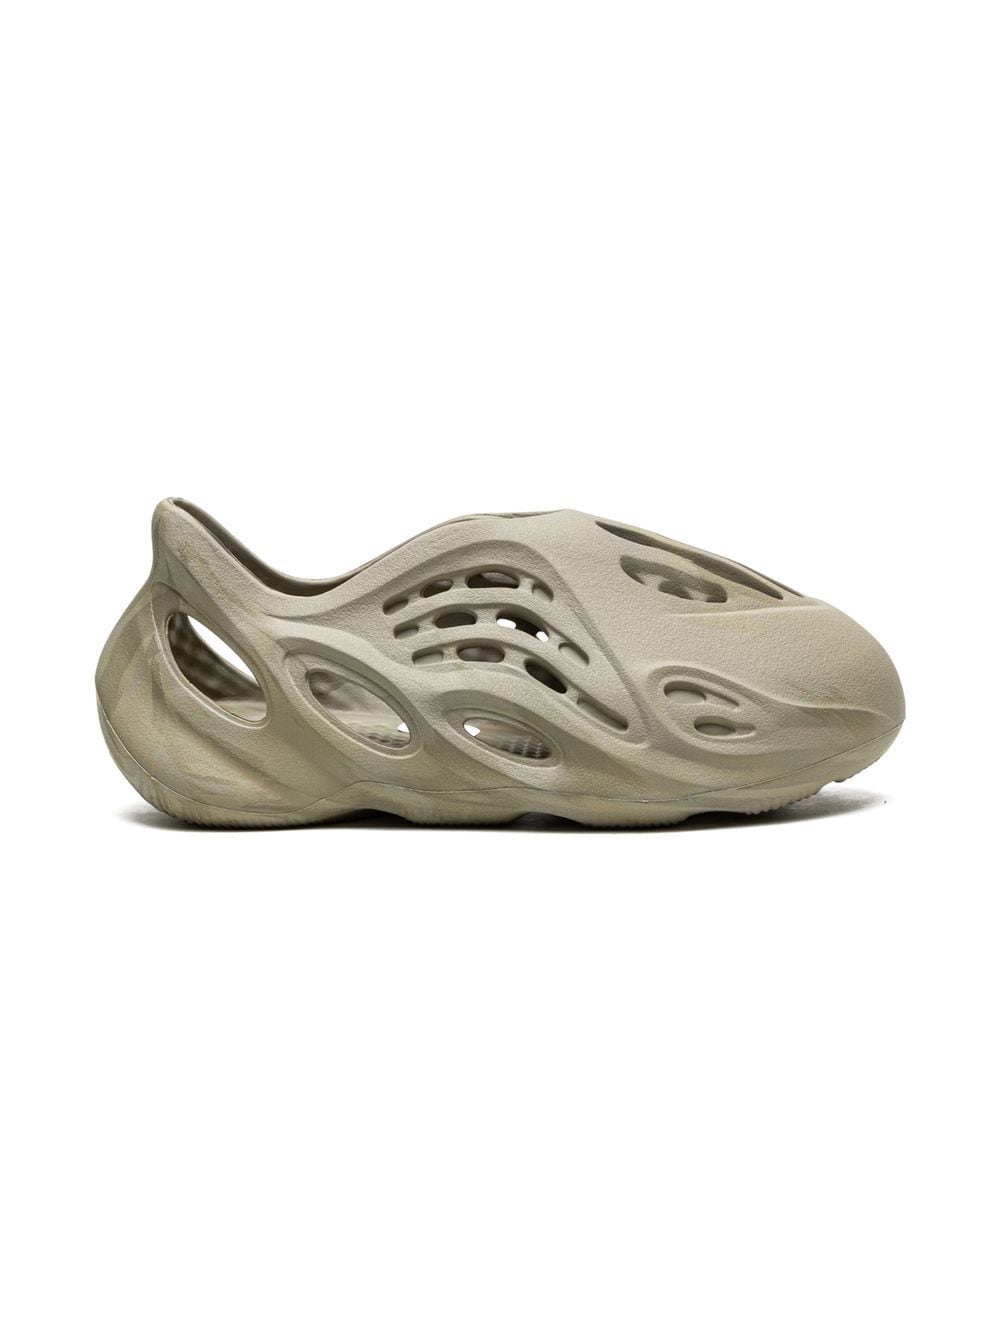 Image 2 of Adidas Yeezy Kids baskets YEEZY Foam Runner 'Stone Sage'